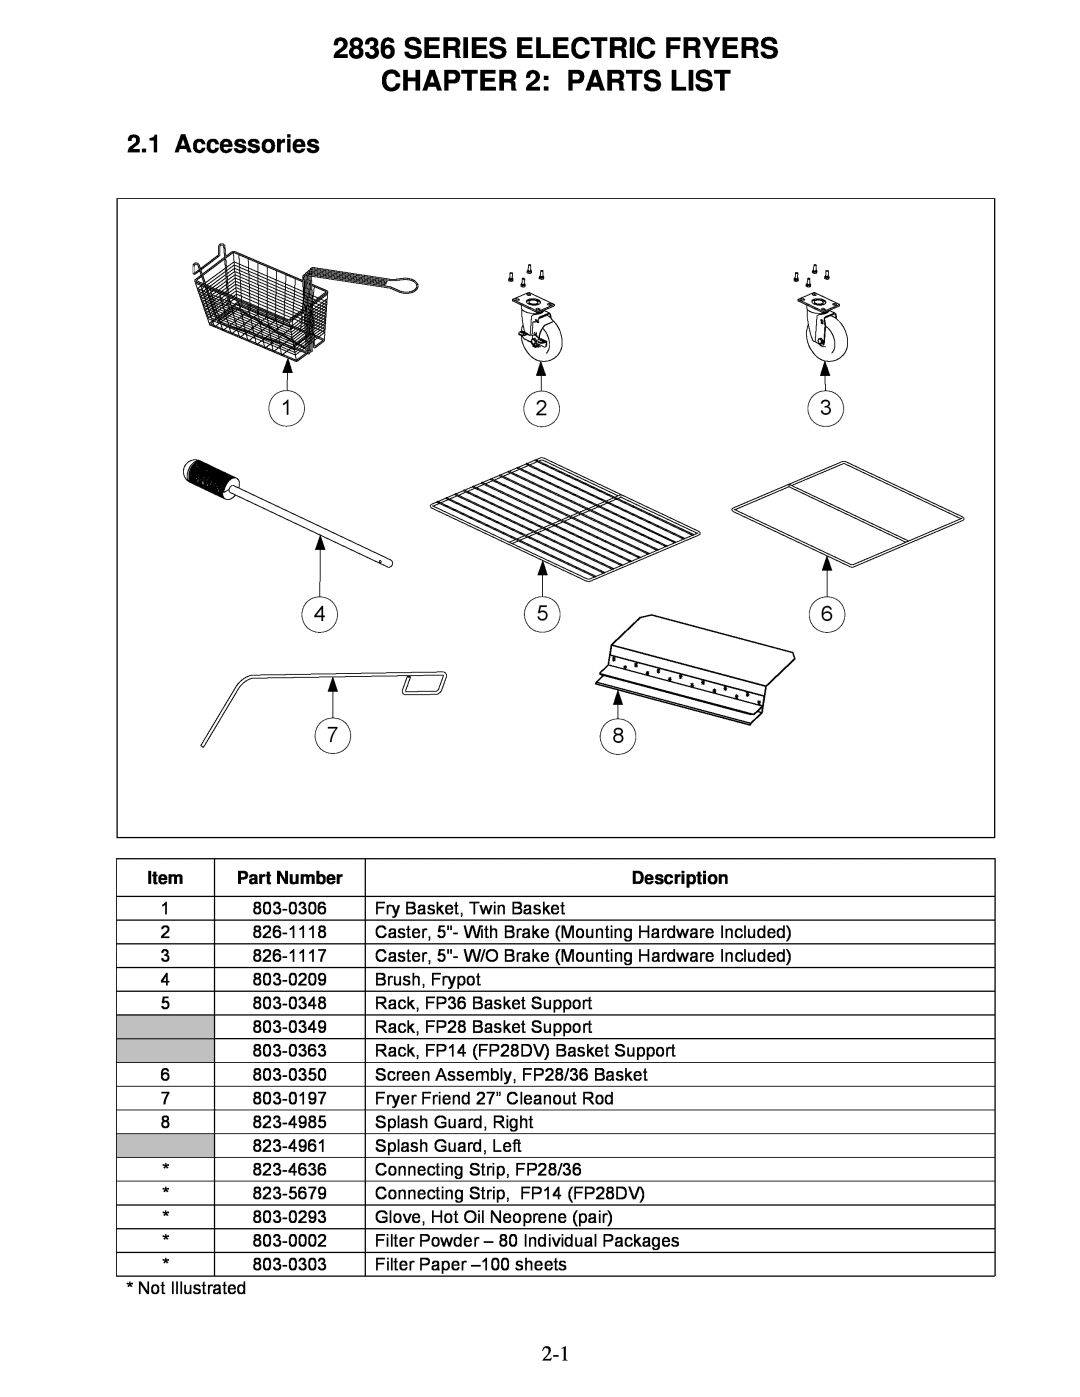 Frymaster 2836 manual Series Electric Fryers Parts List, Accessories, Part Number, Description 